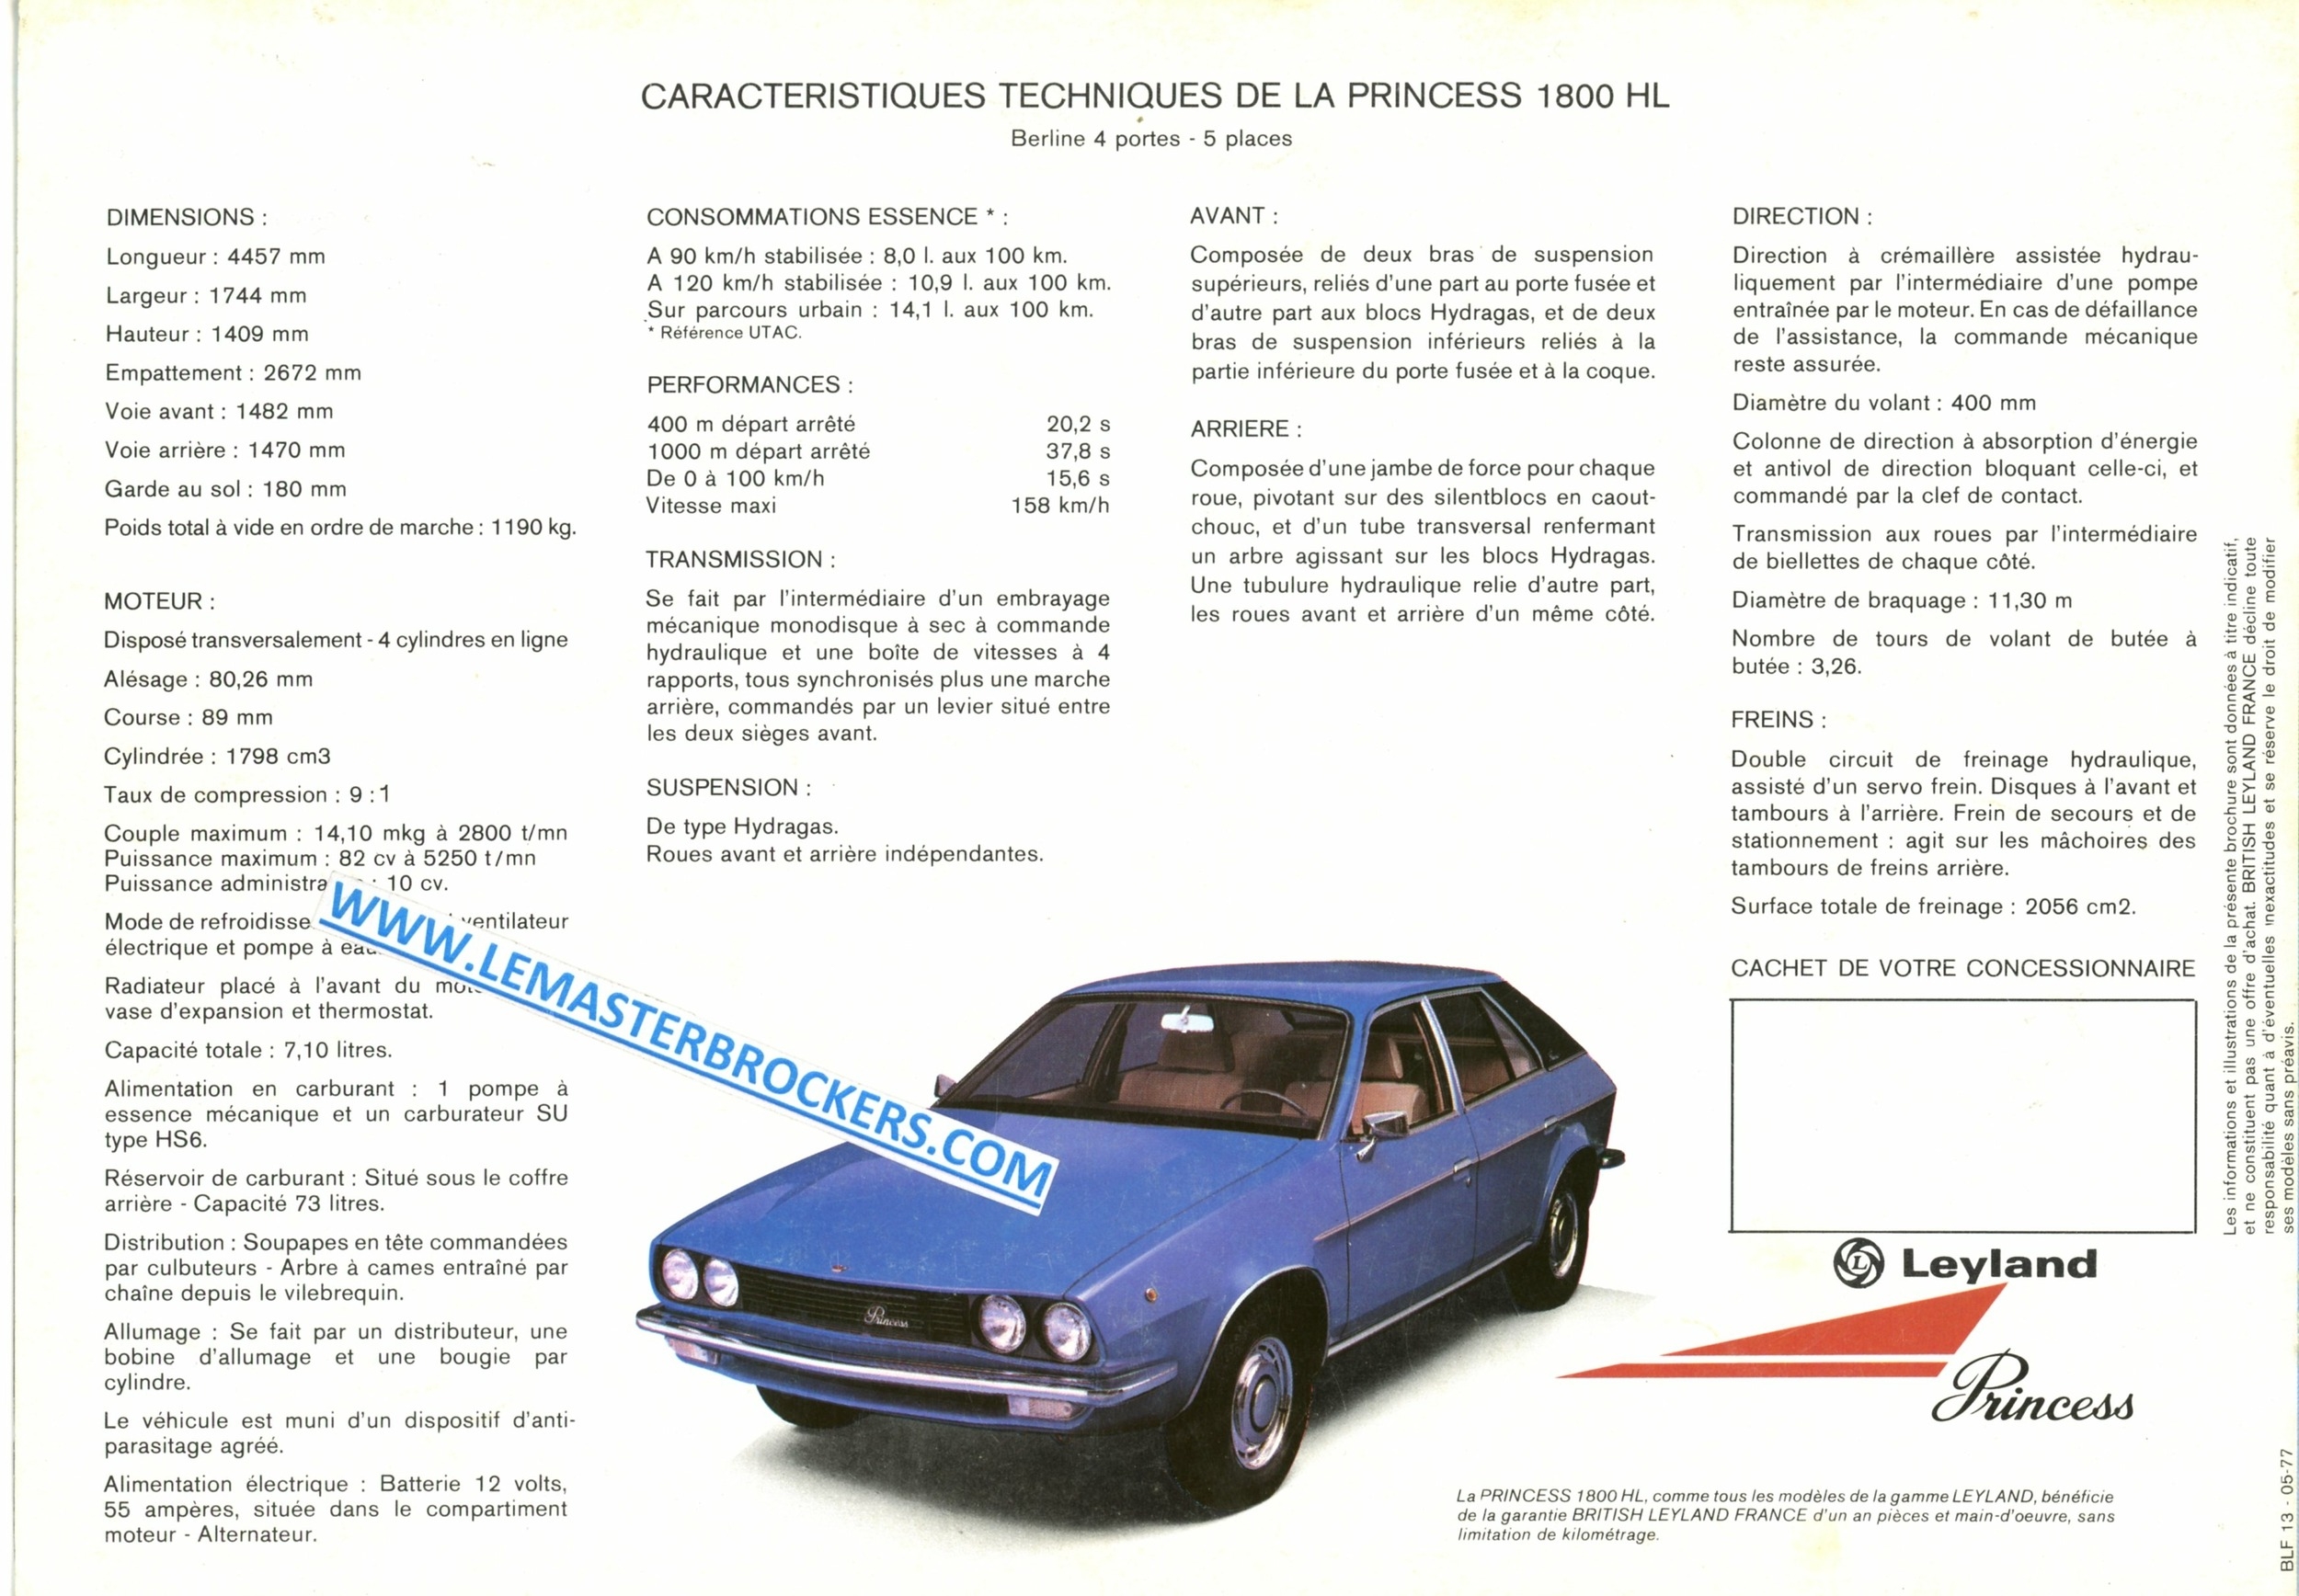 BROCHURE-LEYLAND-PRINCESS-1800HL-1977-LEMASTERBROCKERS-COM-CATALOGUE-VOITURE